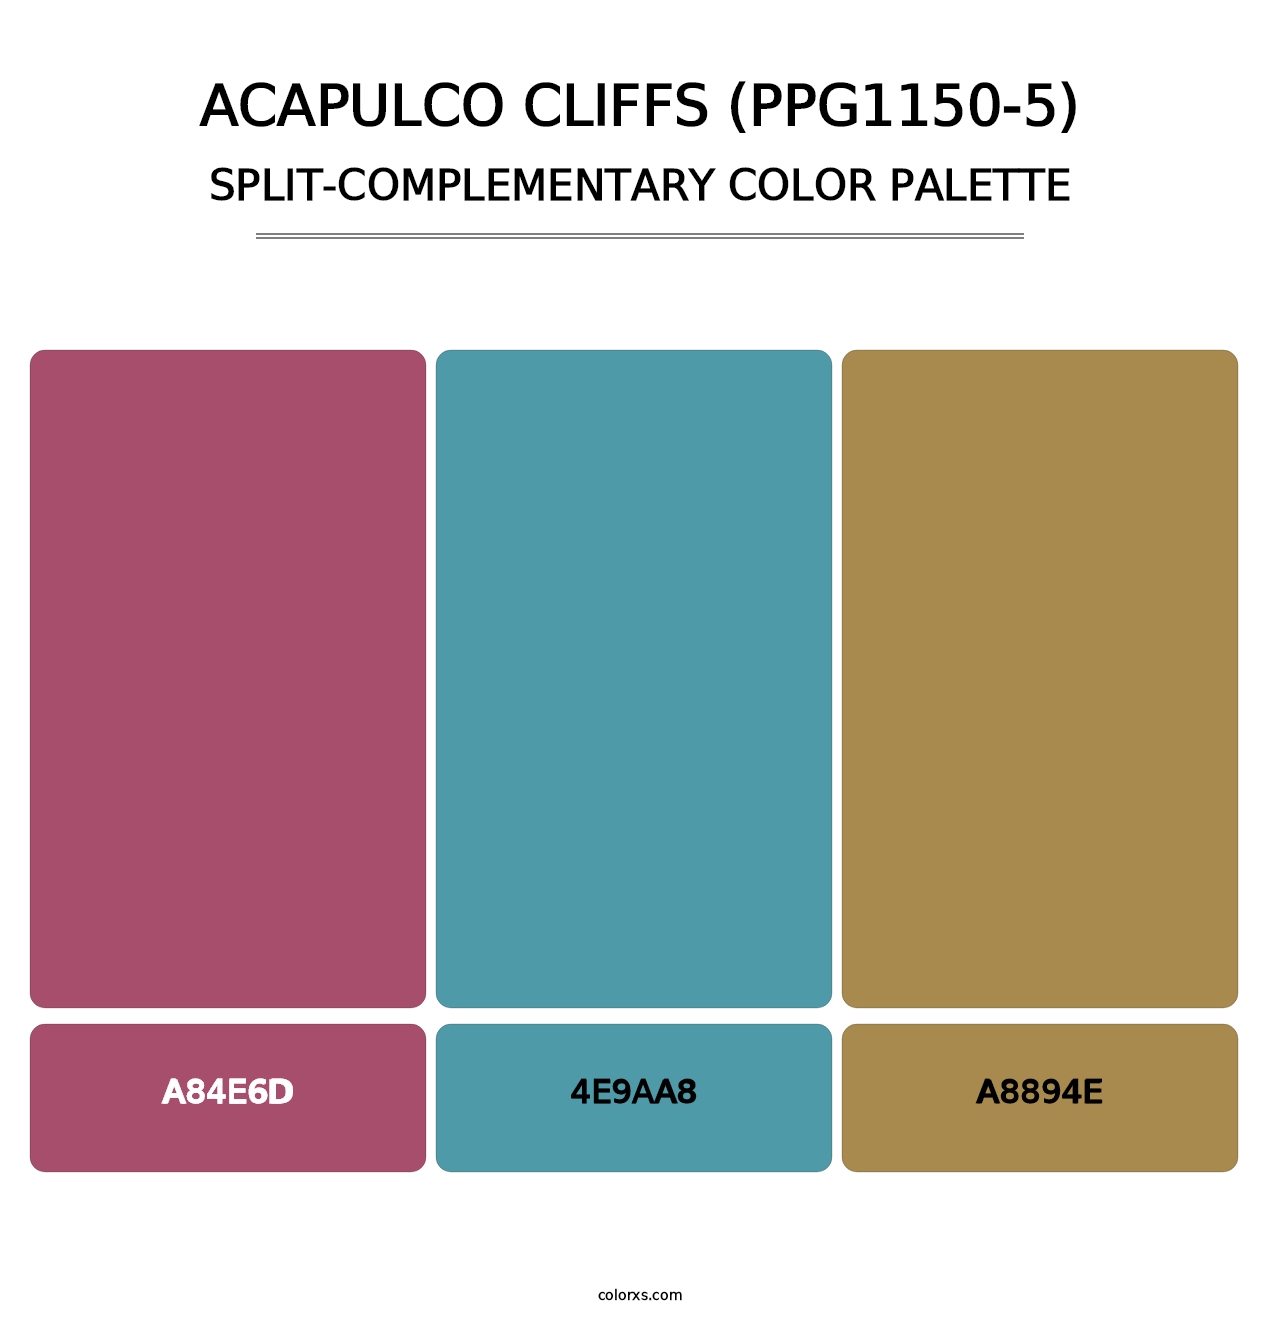 Acapulco Cliffs (PPG1150-5) - Split-Complementary Color Palette